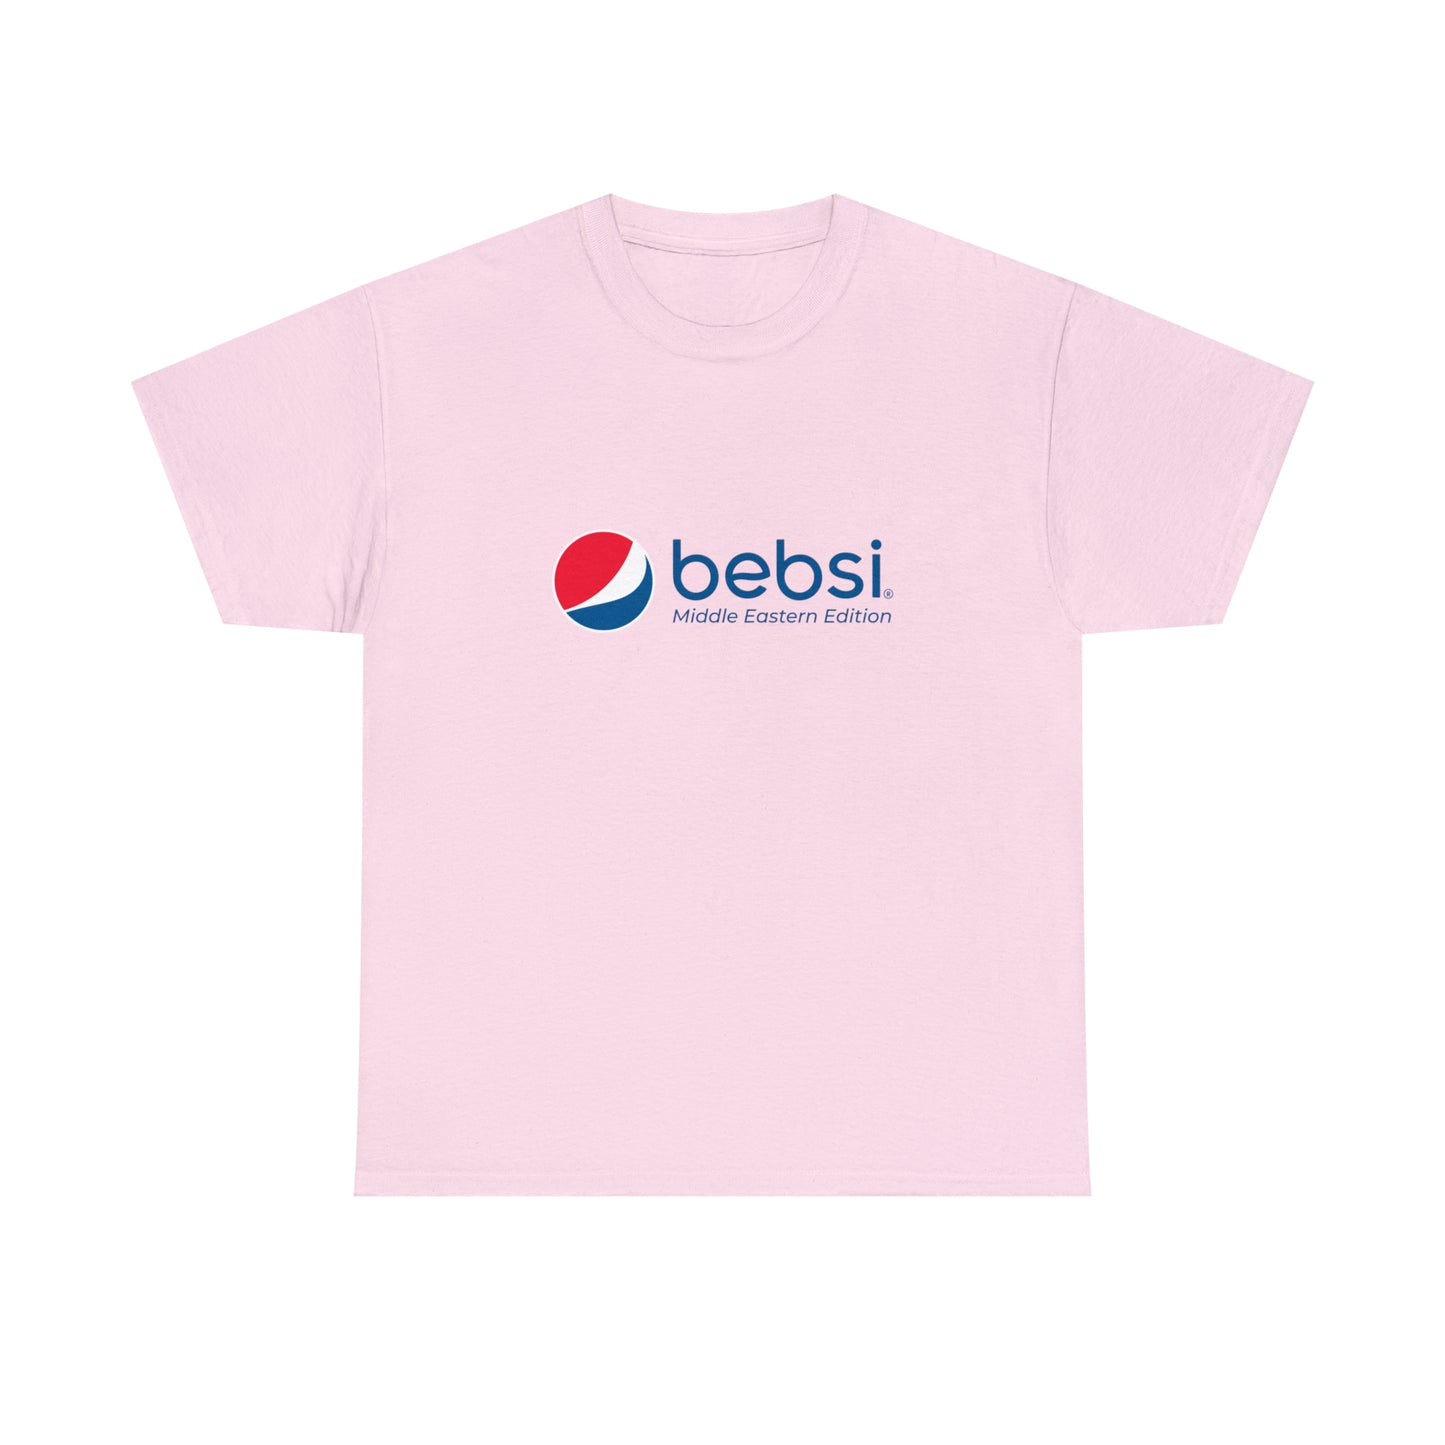 Custom Parody T-shirt, Bebsi shirt design